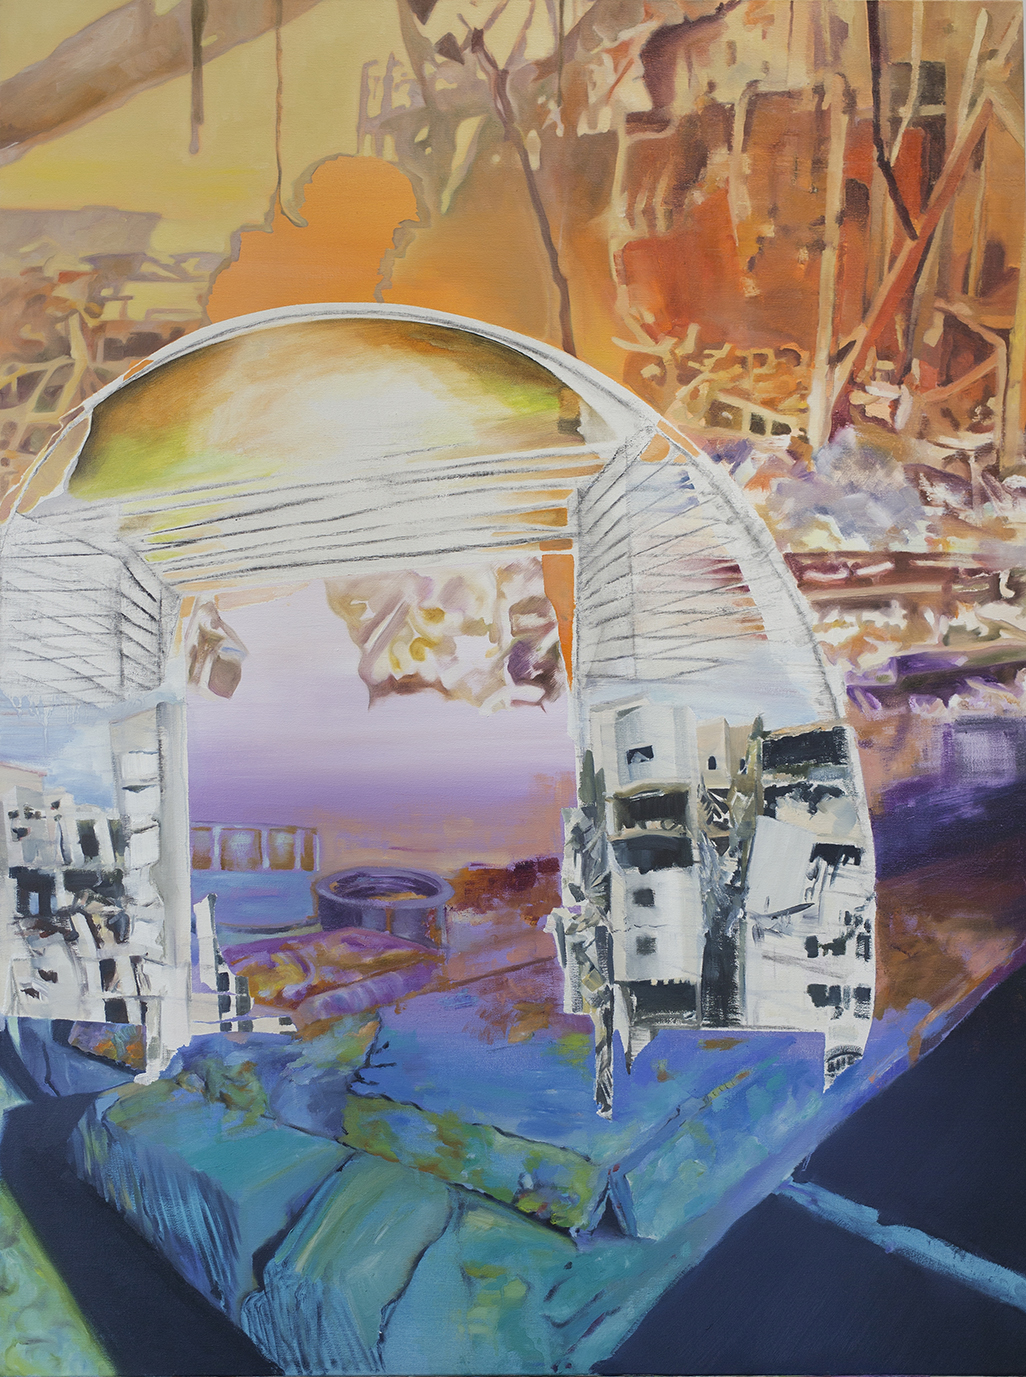 Jenny Aglits
"Downward Movement"
2021
Oil on Canvas
80x110 cm